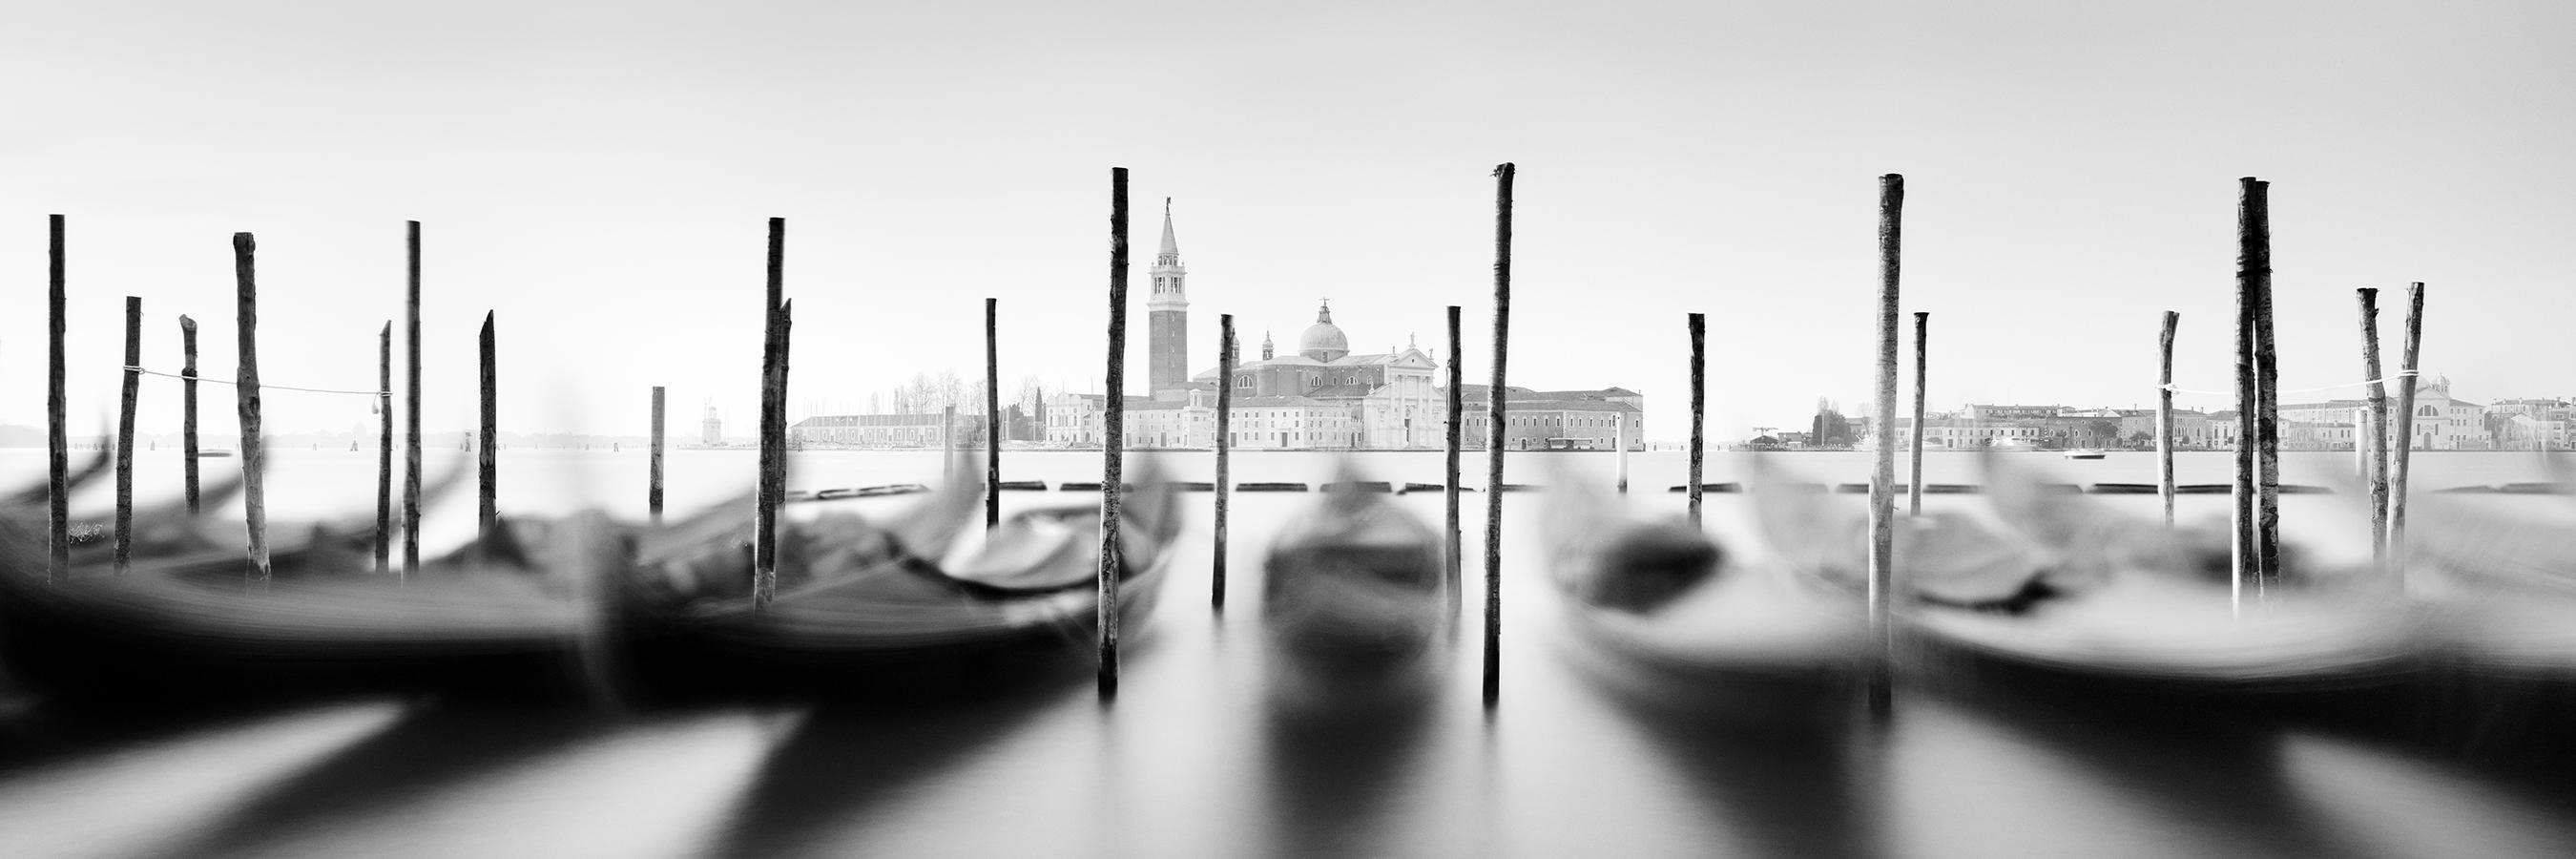 Gerald Berghammer Black and White Photograph - Basilica and Gondola, Venice, Italy, minimalist black and white art landscape